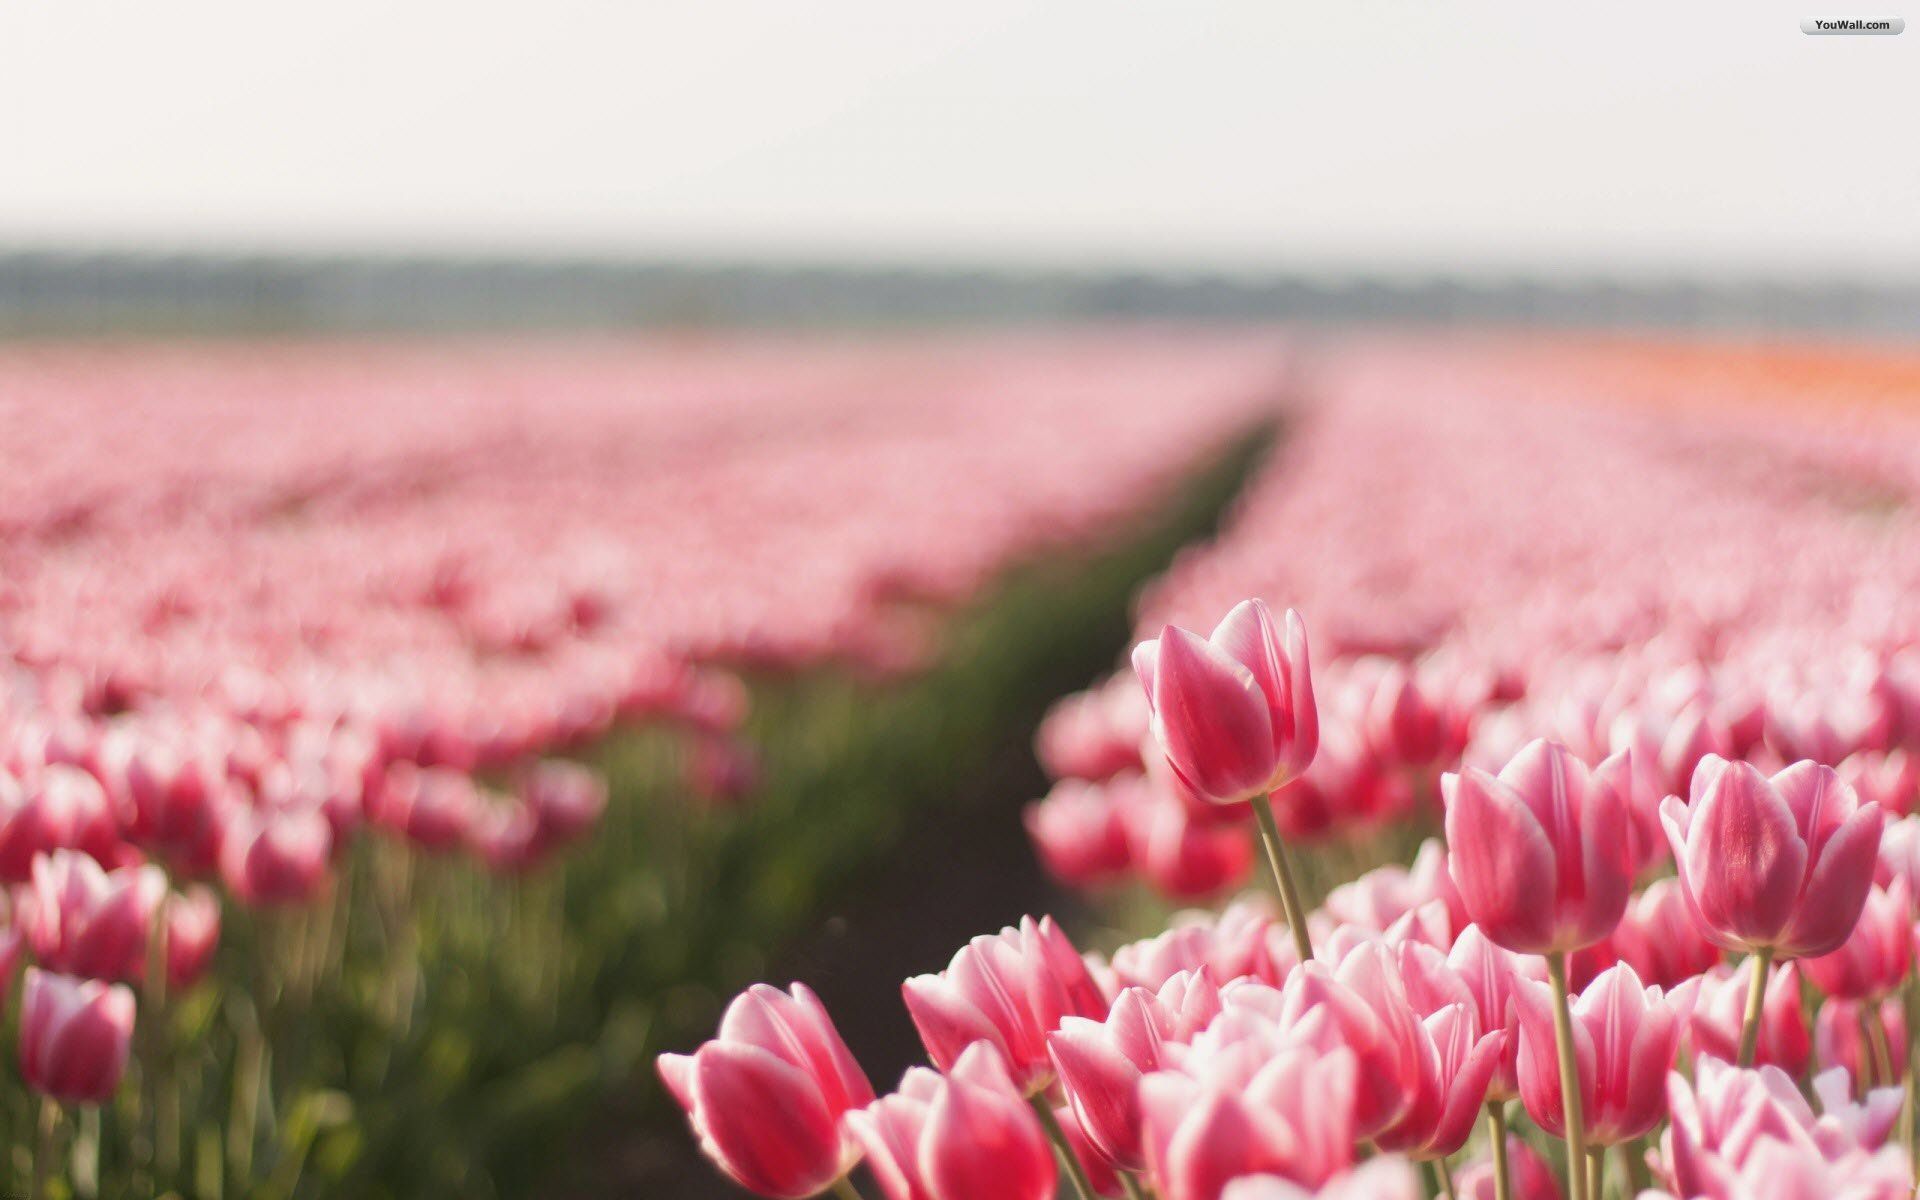 YouWall - Pink Tulips Field Wallpaper - wallpaper,wallpapers,free